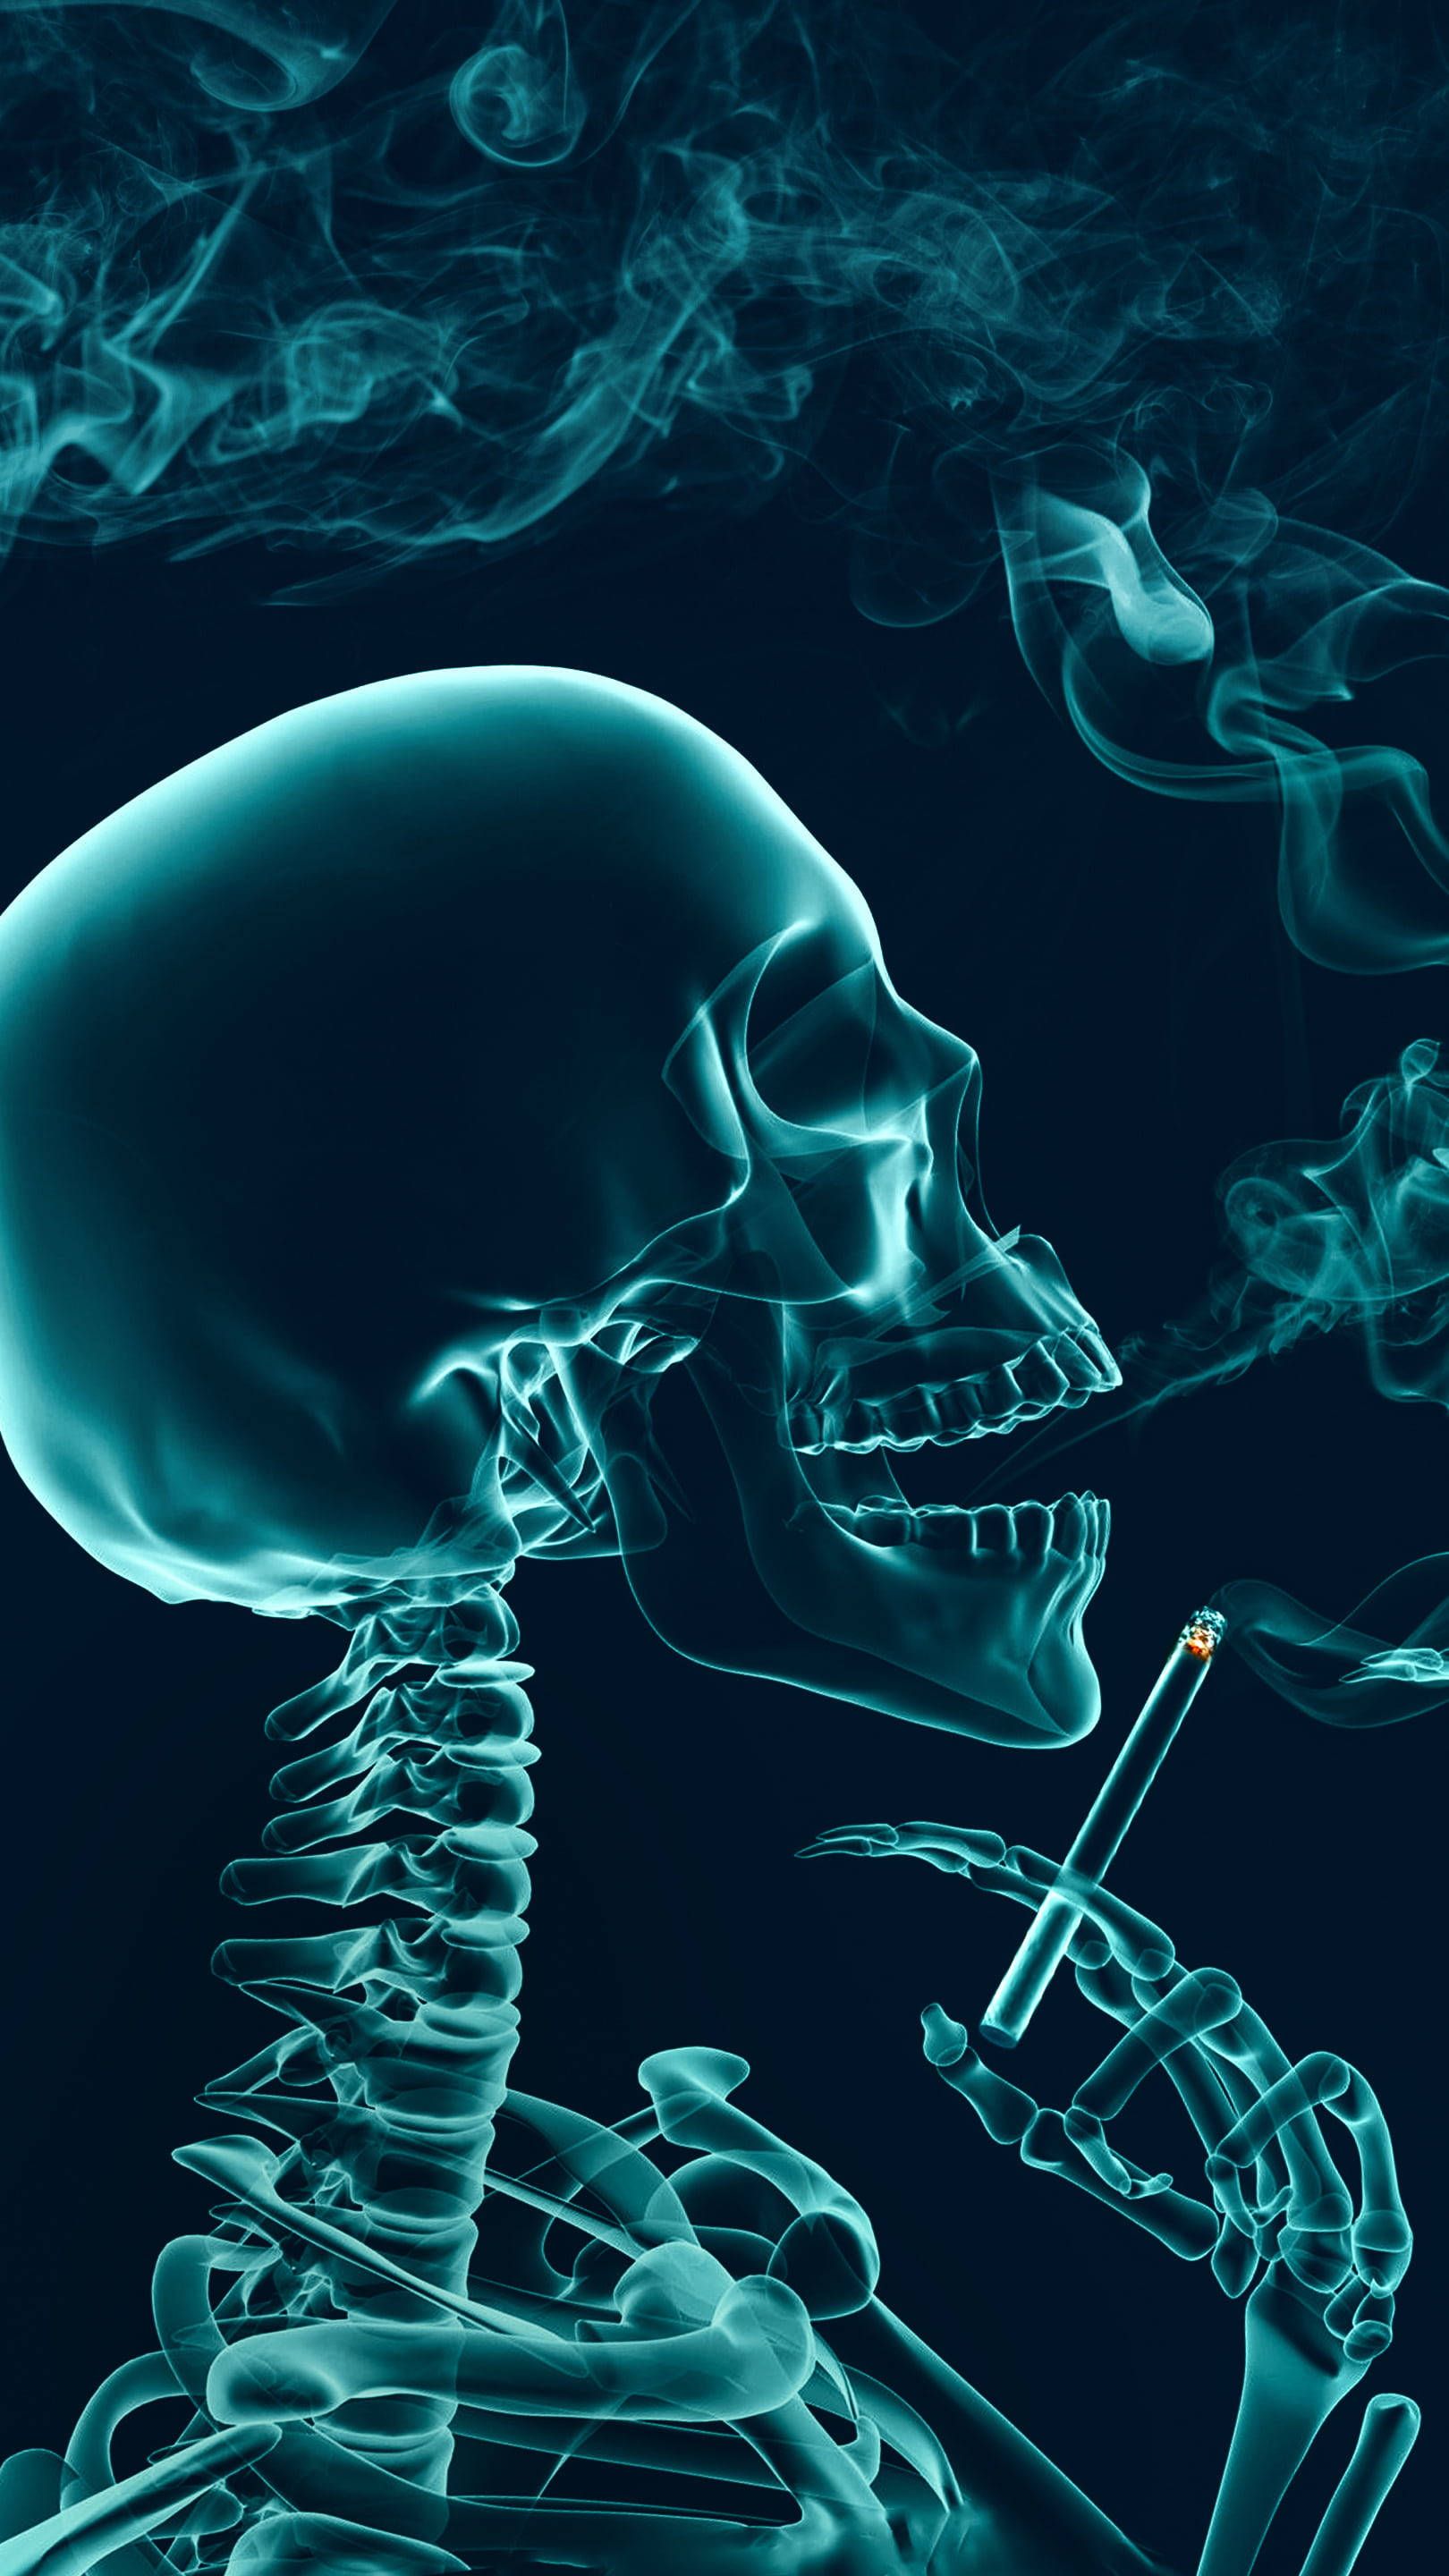 A skeleton smoking cigarette in dark room - Skeleton, anatomy